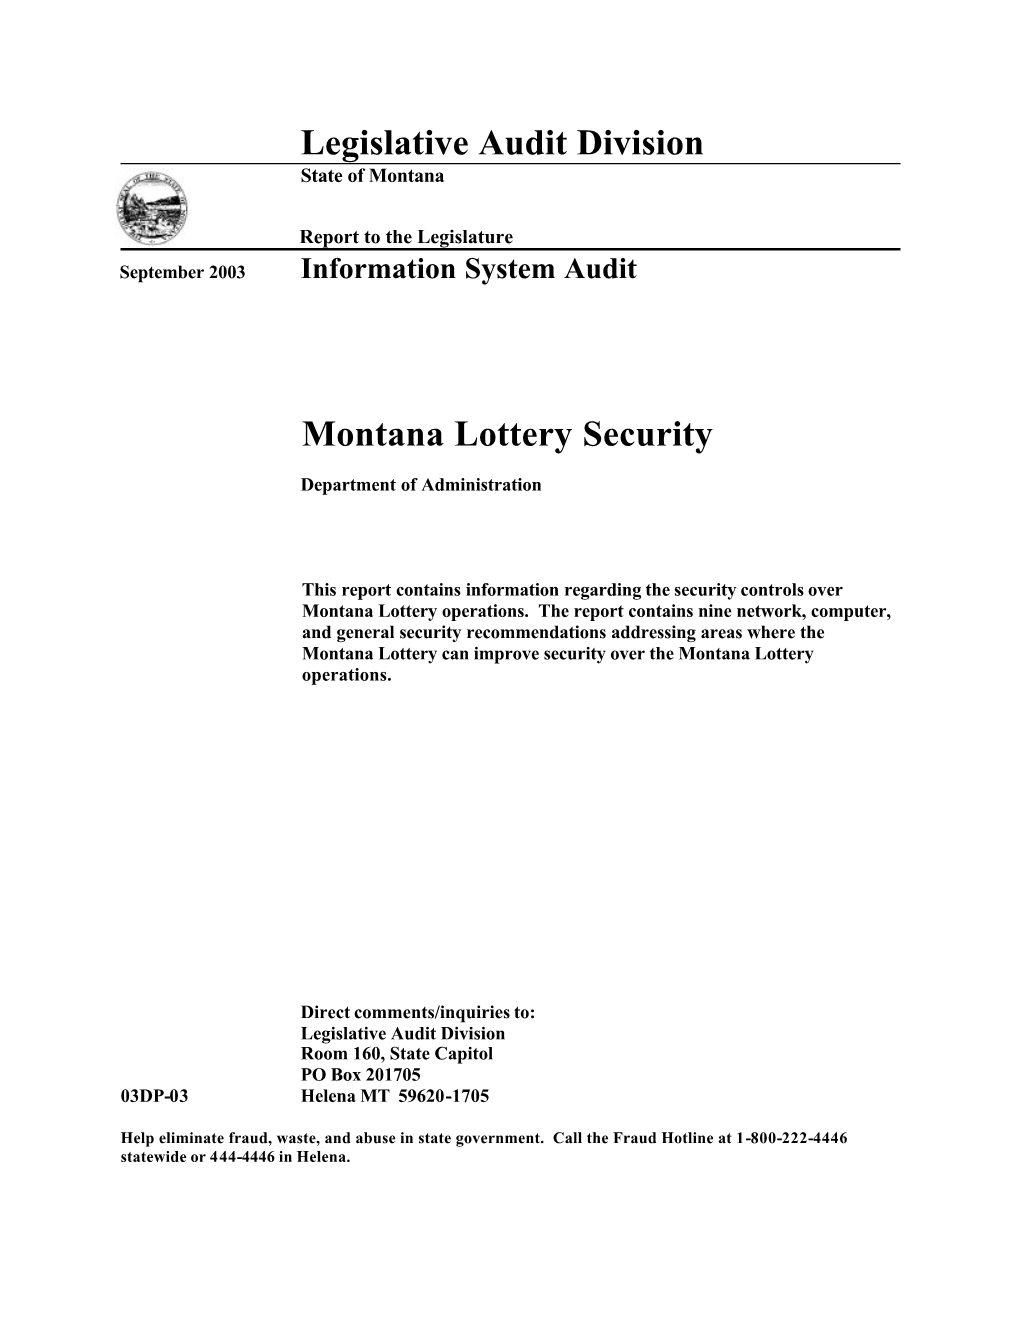 Montana Lottery Security